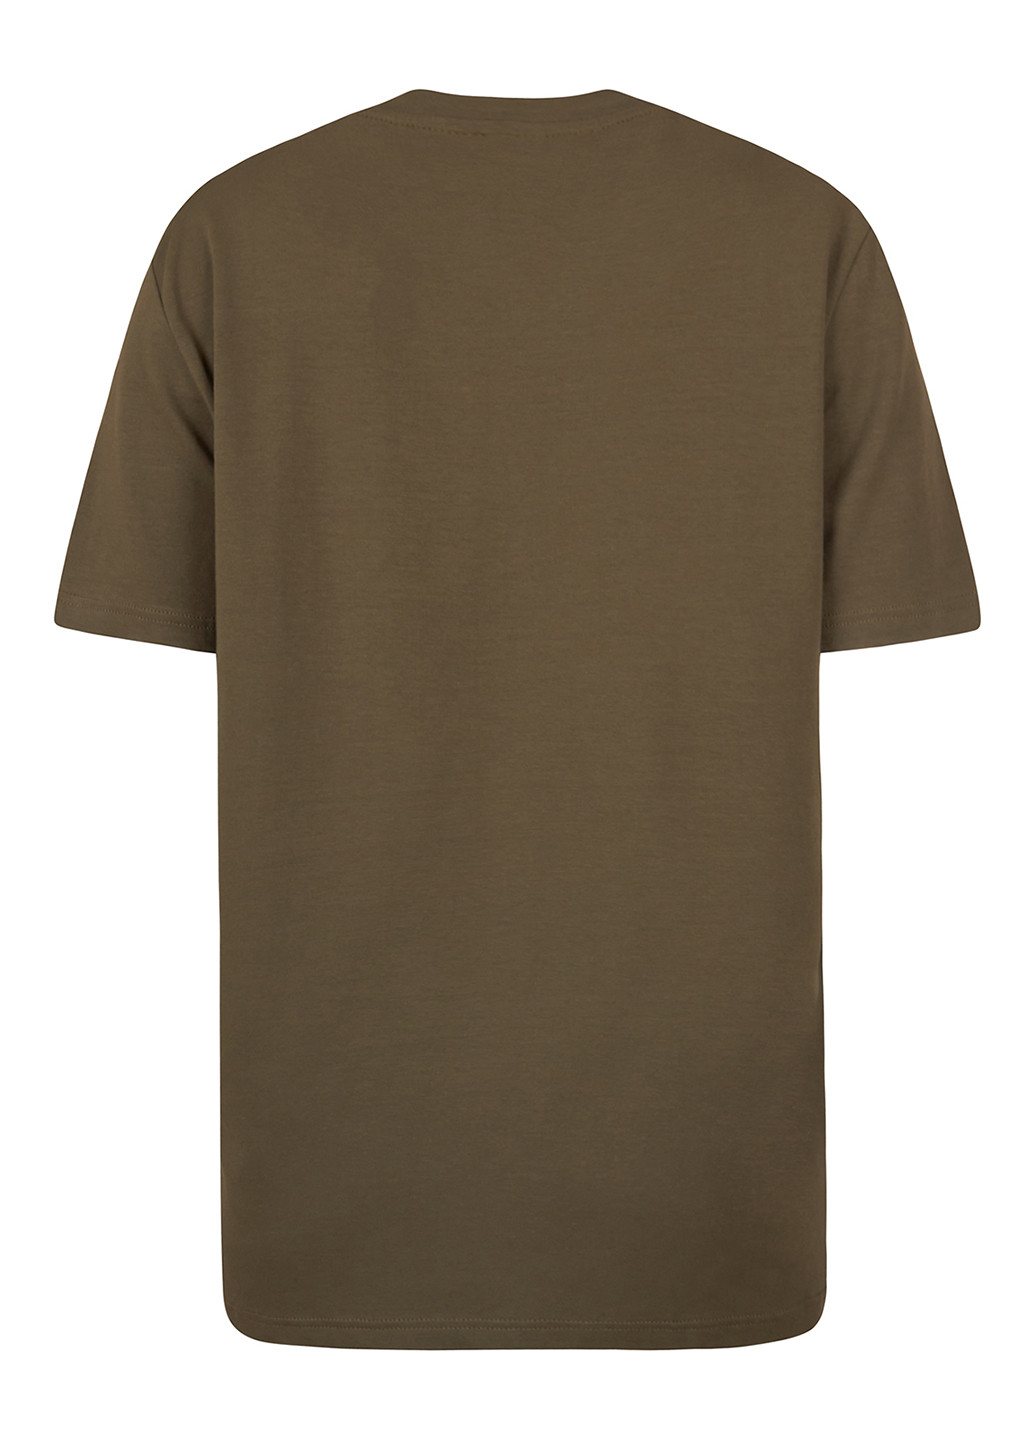 Хаки (оливковая) летняя футболка Garnamama